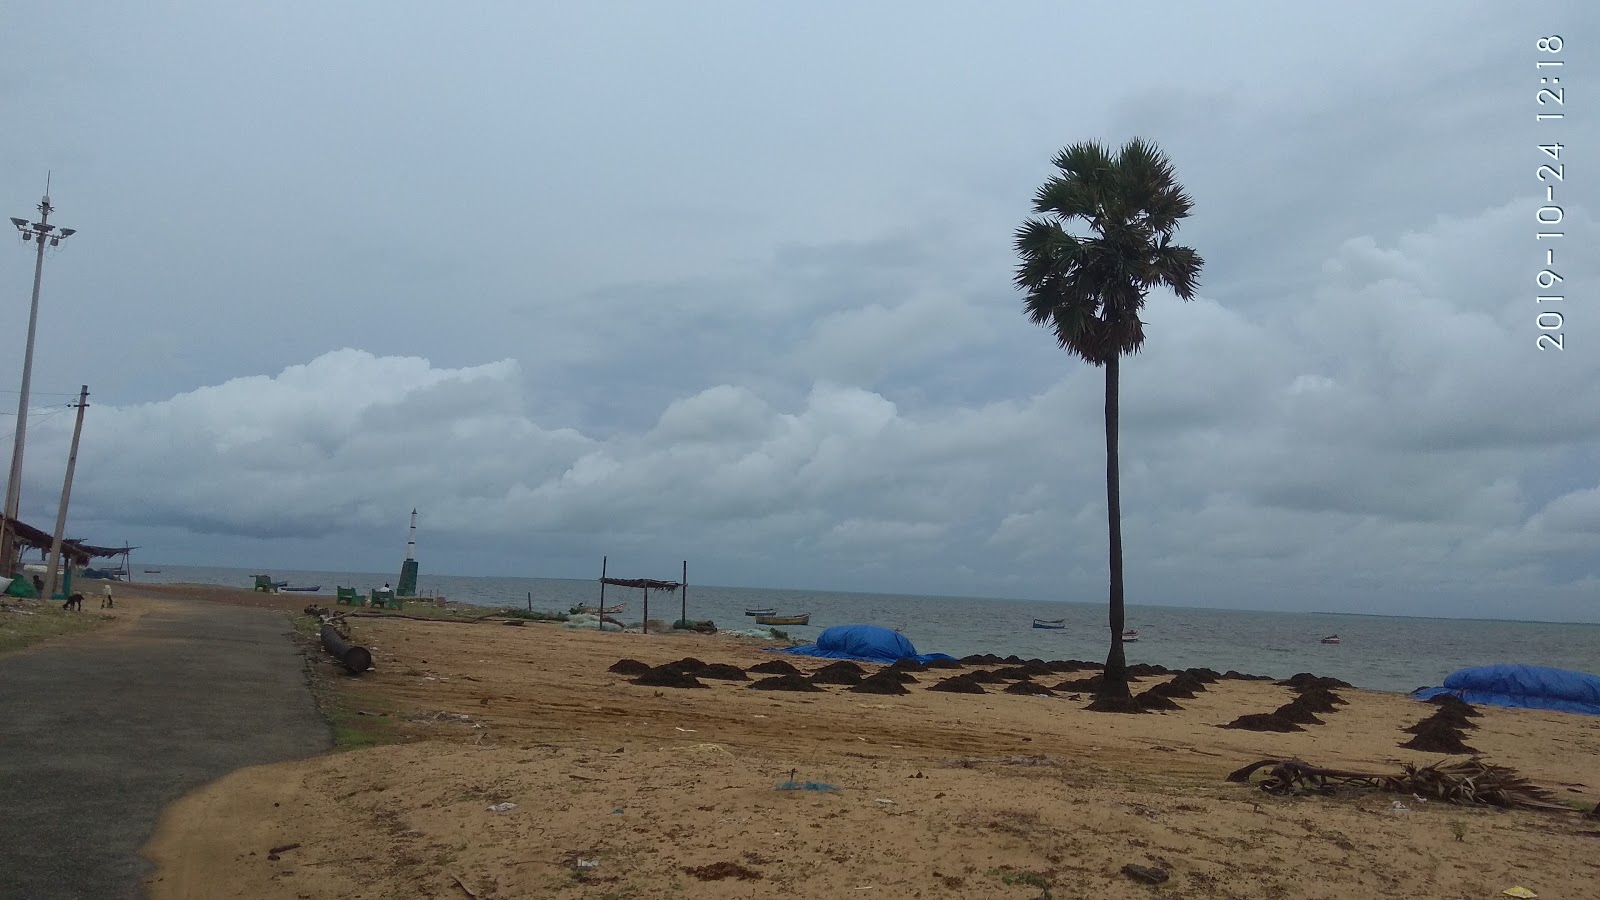 Foto de Seeni Appa Dargha Beach - lugar popular entre os apreciadores de relaxamento